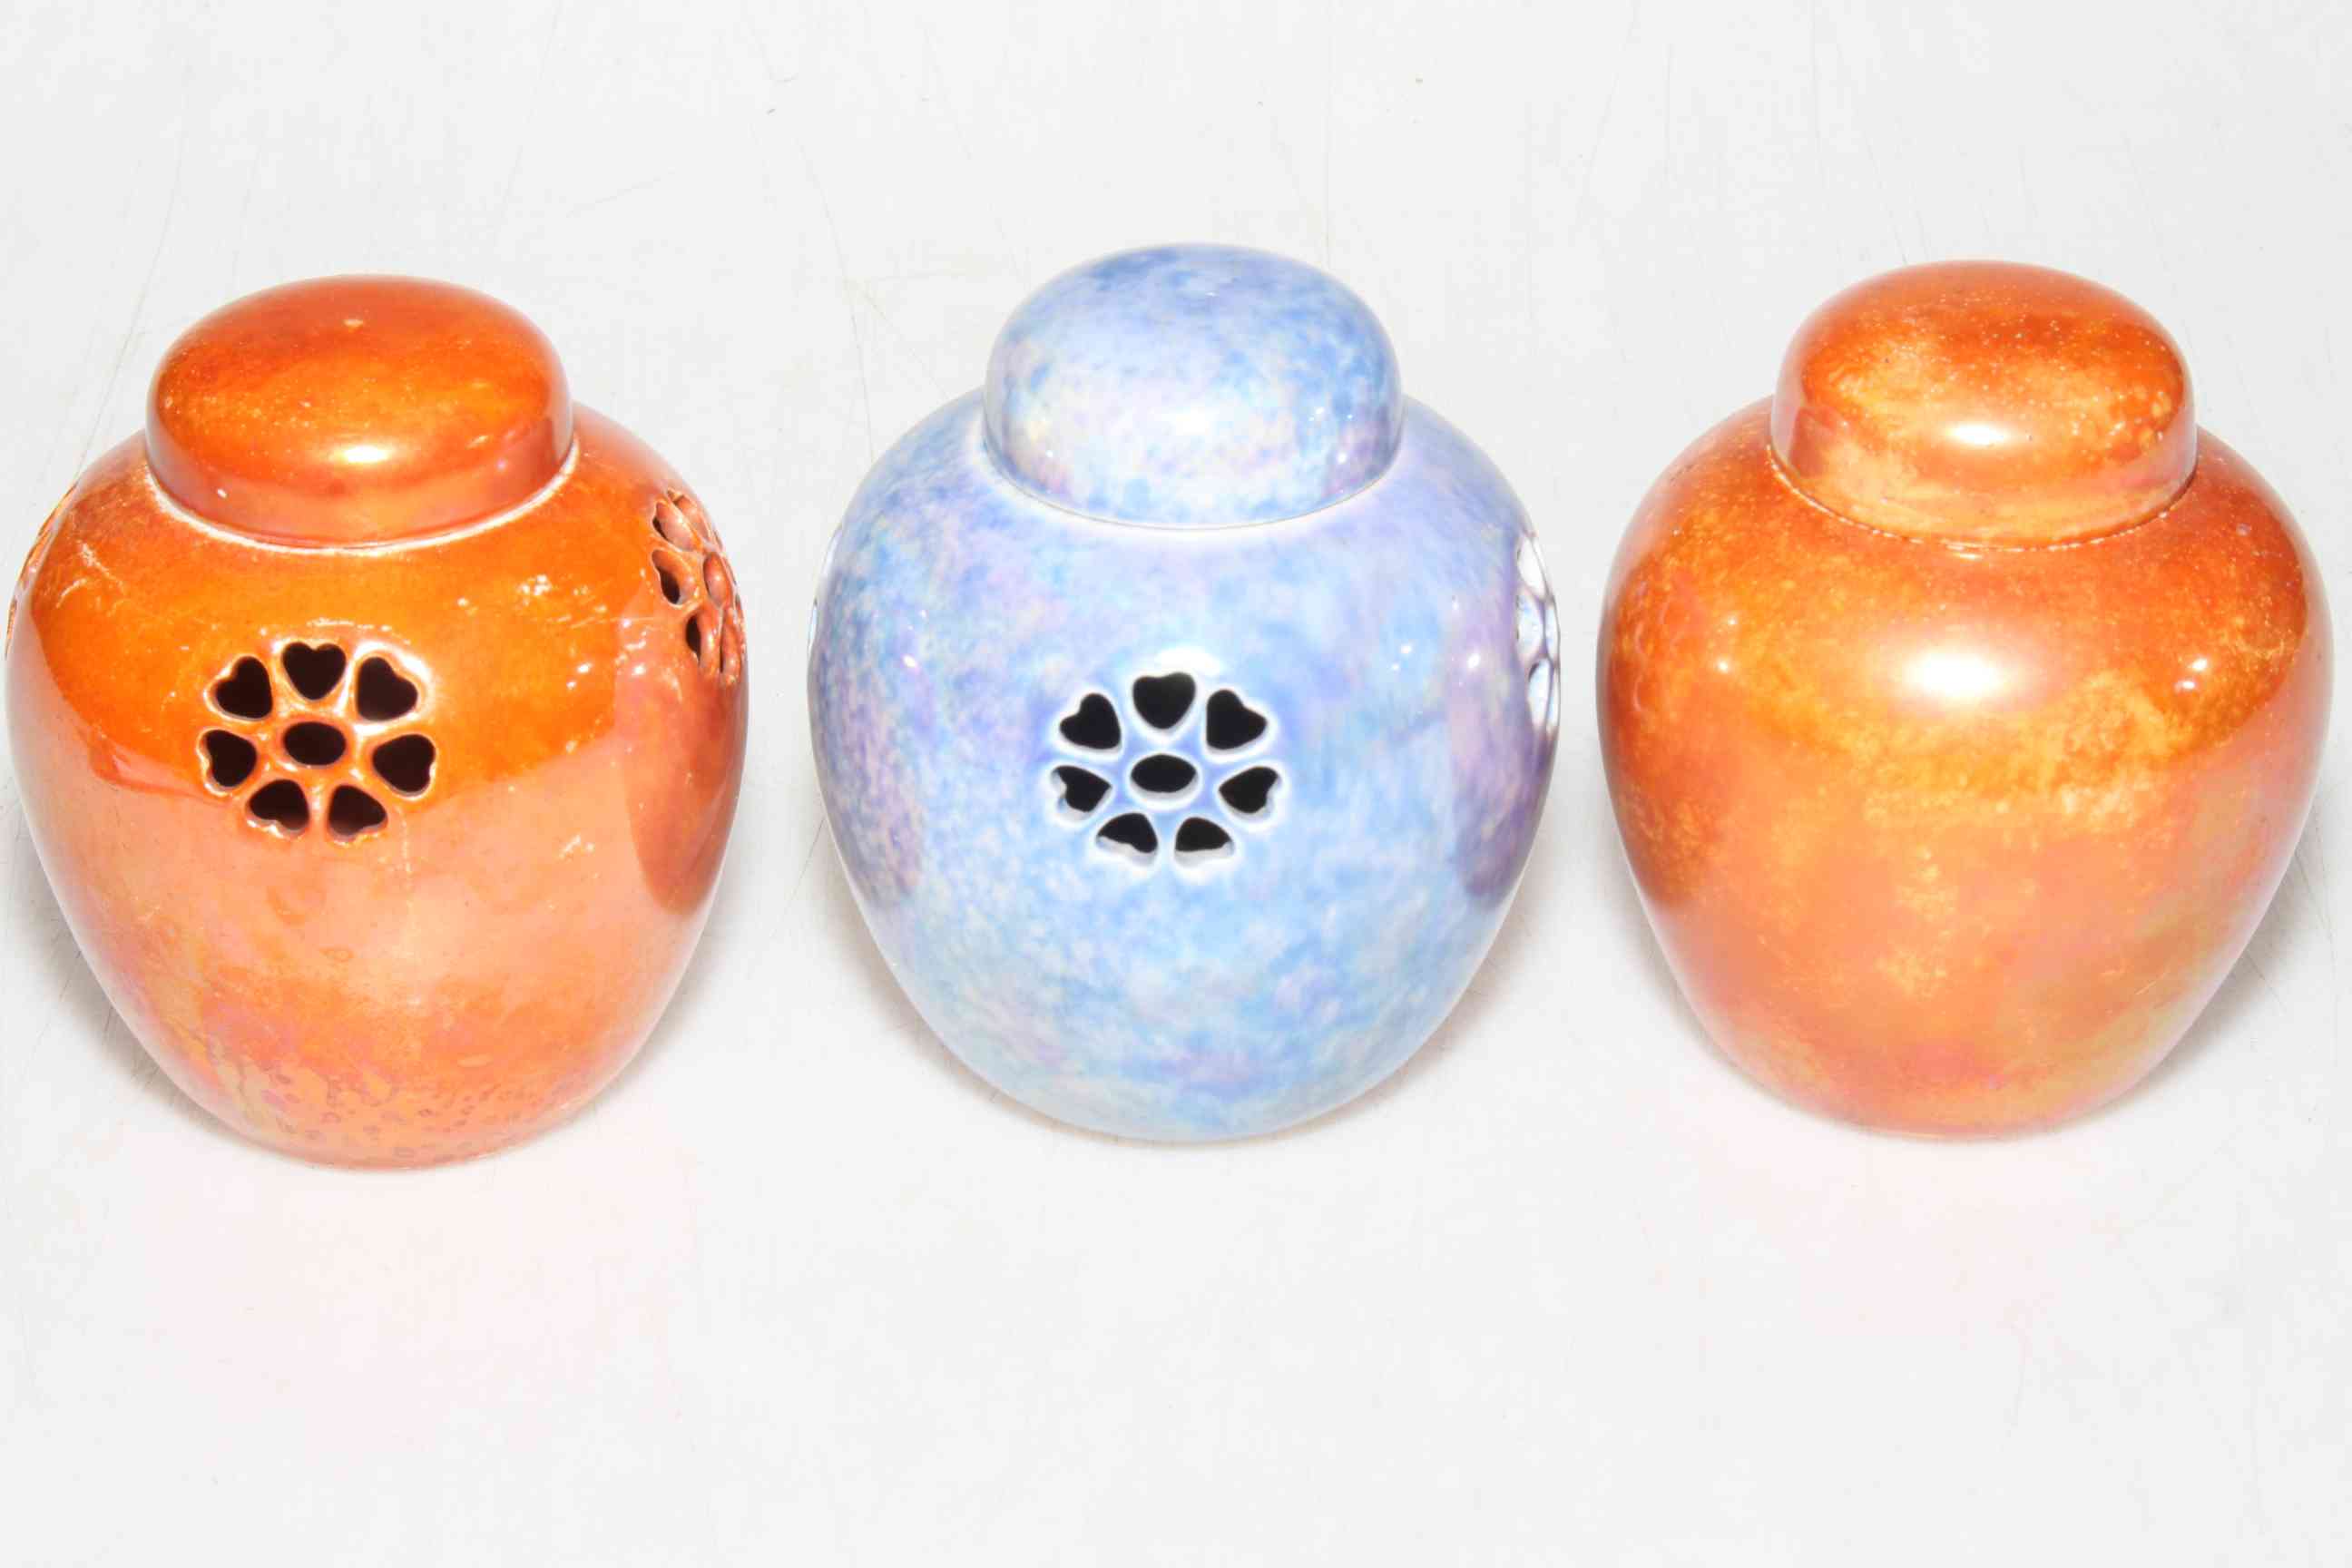 Three Ruskin Pottery pot pourri jars and lids, two orange glazed and blue one blue glazed,